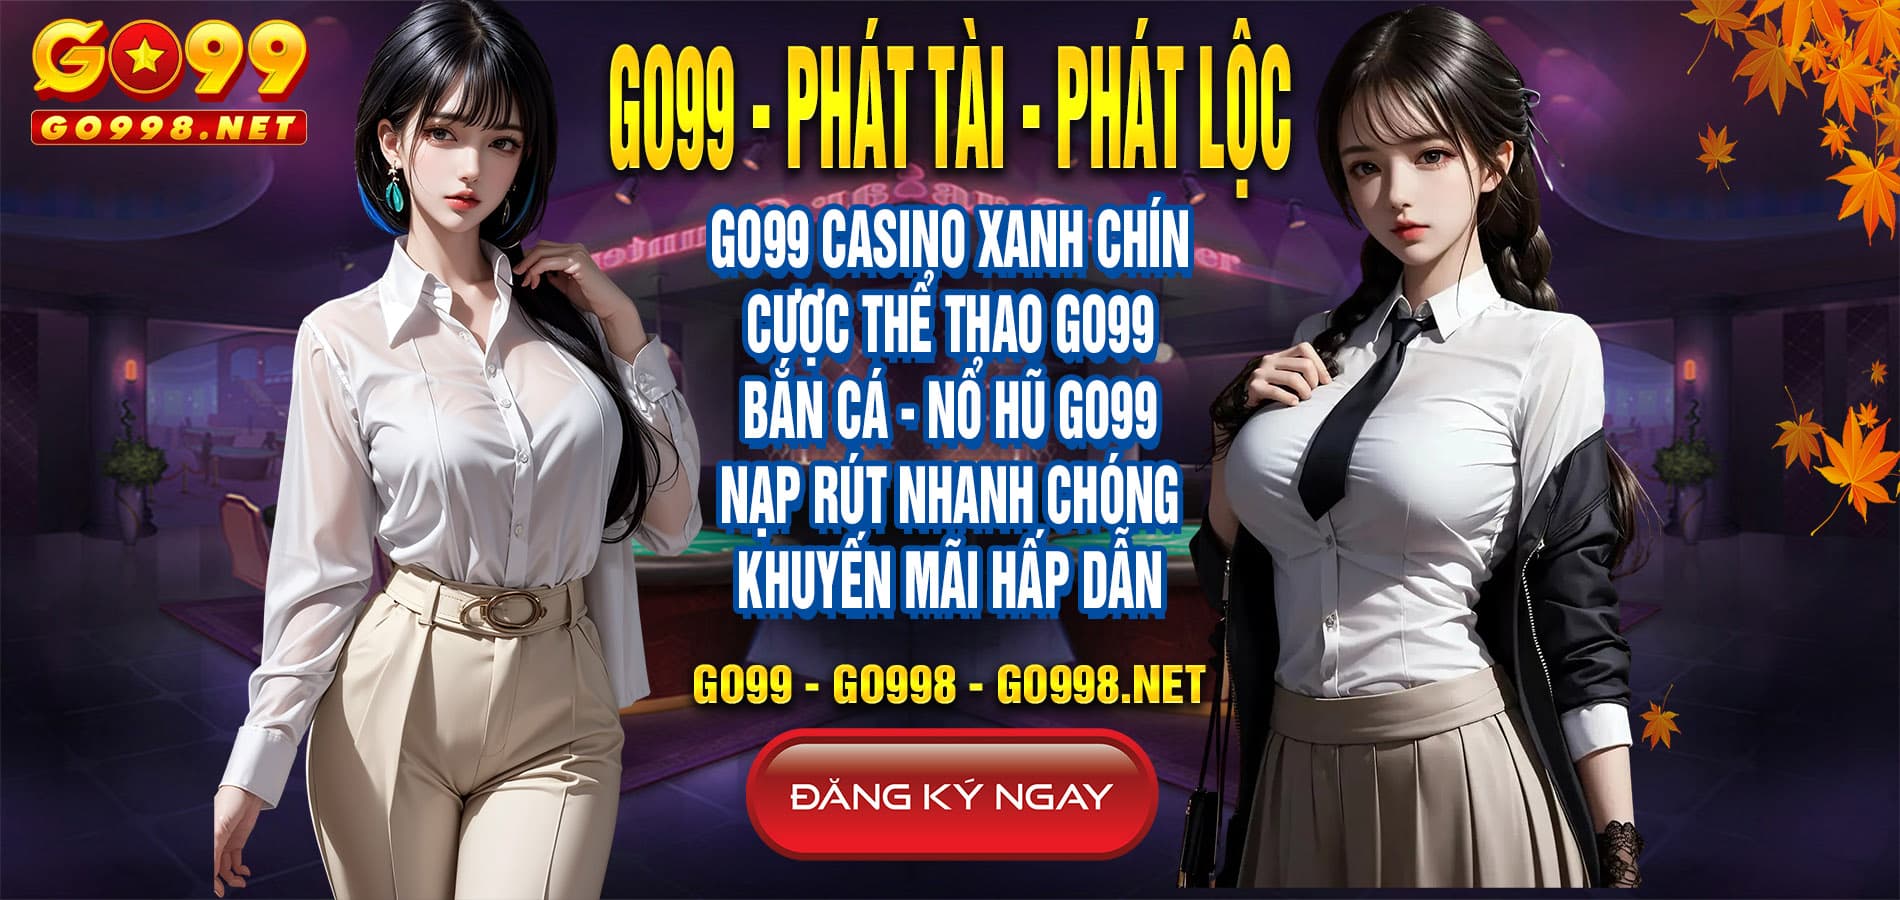 go99-phat-tai-phat-loc